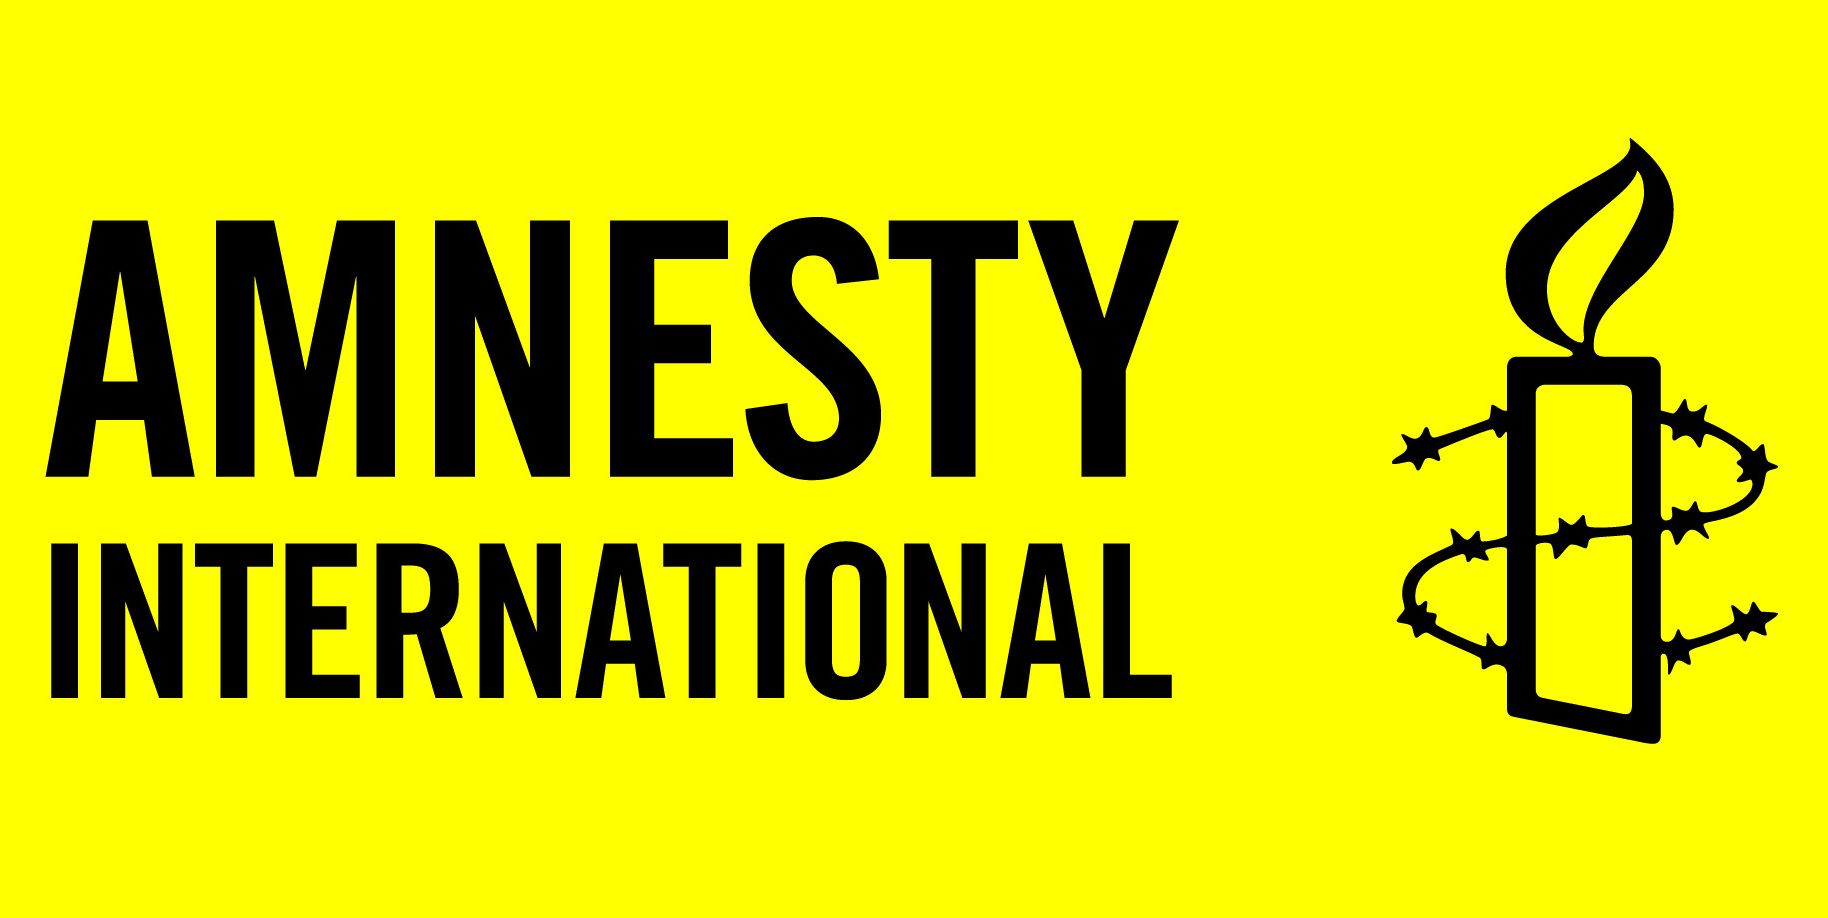 (c) Amnesty.ca